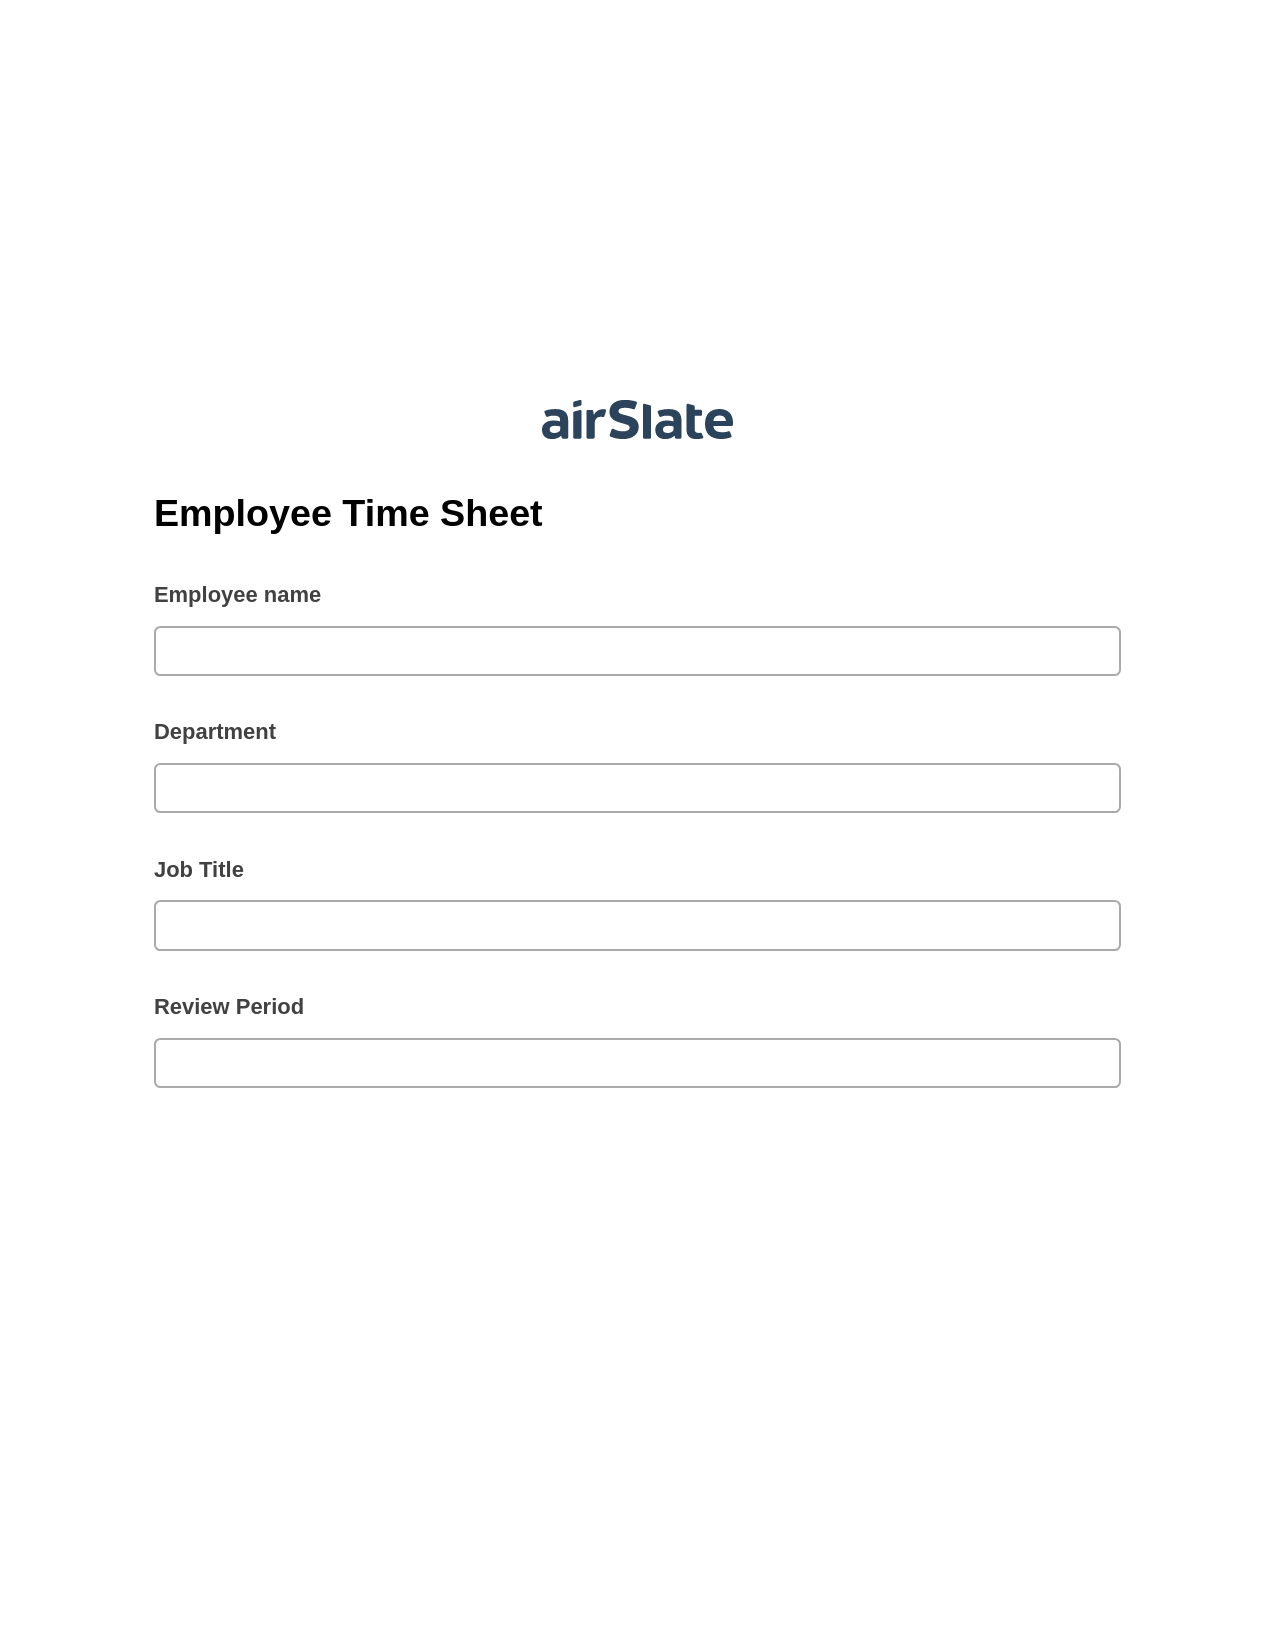 Multirole Employee Time Sheet Pre-fill from Smartsheet Bot, Update Audit Trail Bot, Archive to SharePoint Folder Bot